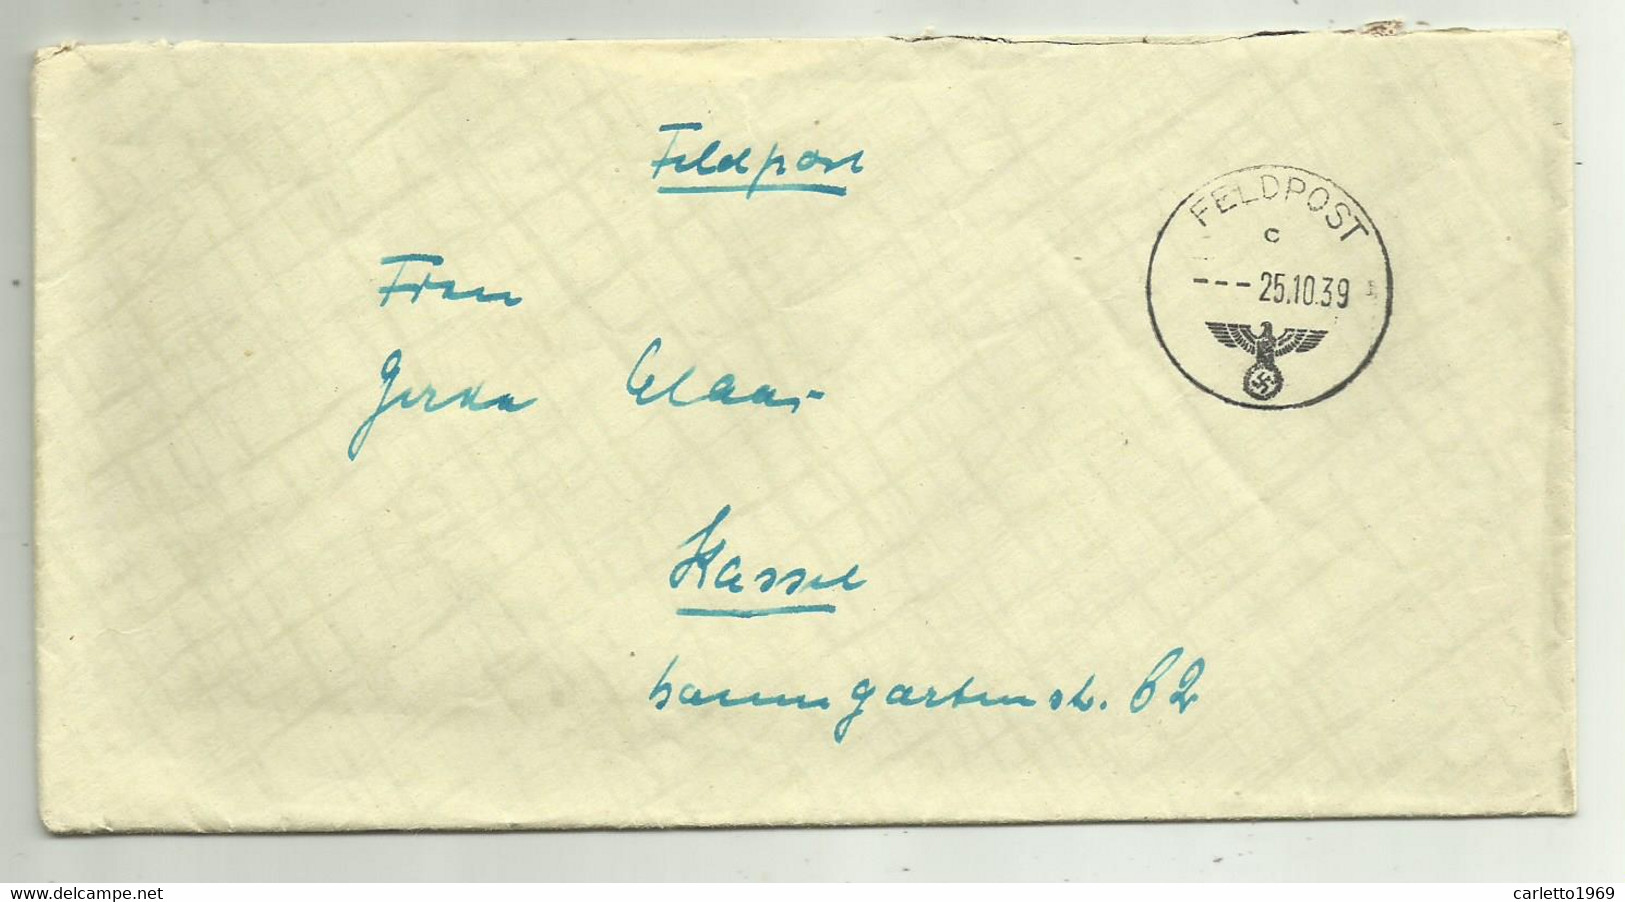 FELDPOST 1939 CON LETTERA - Lettres & Documents